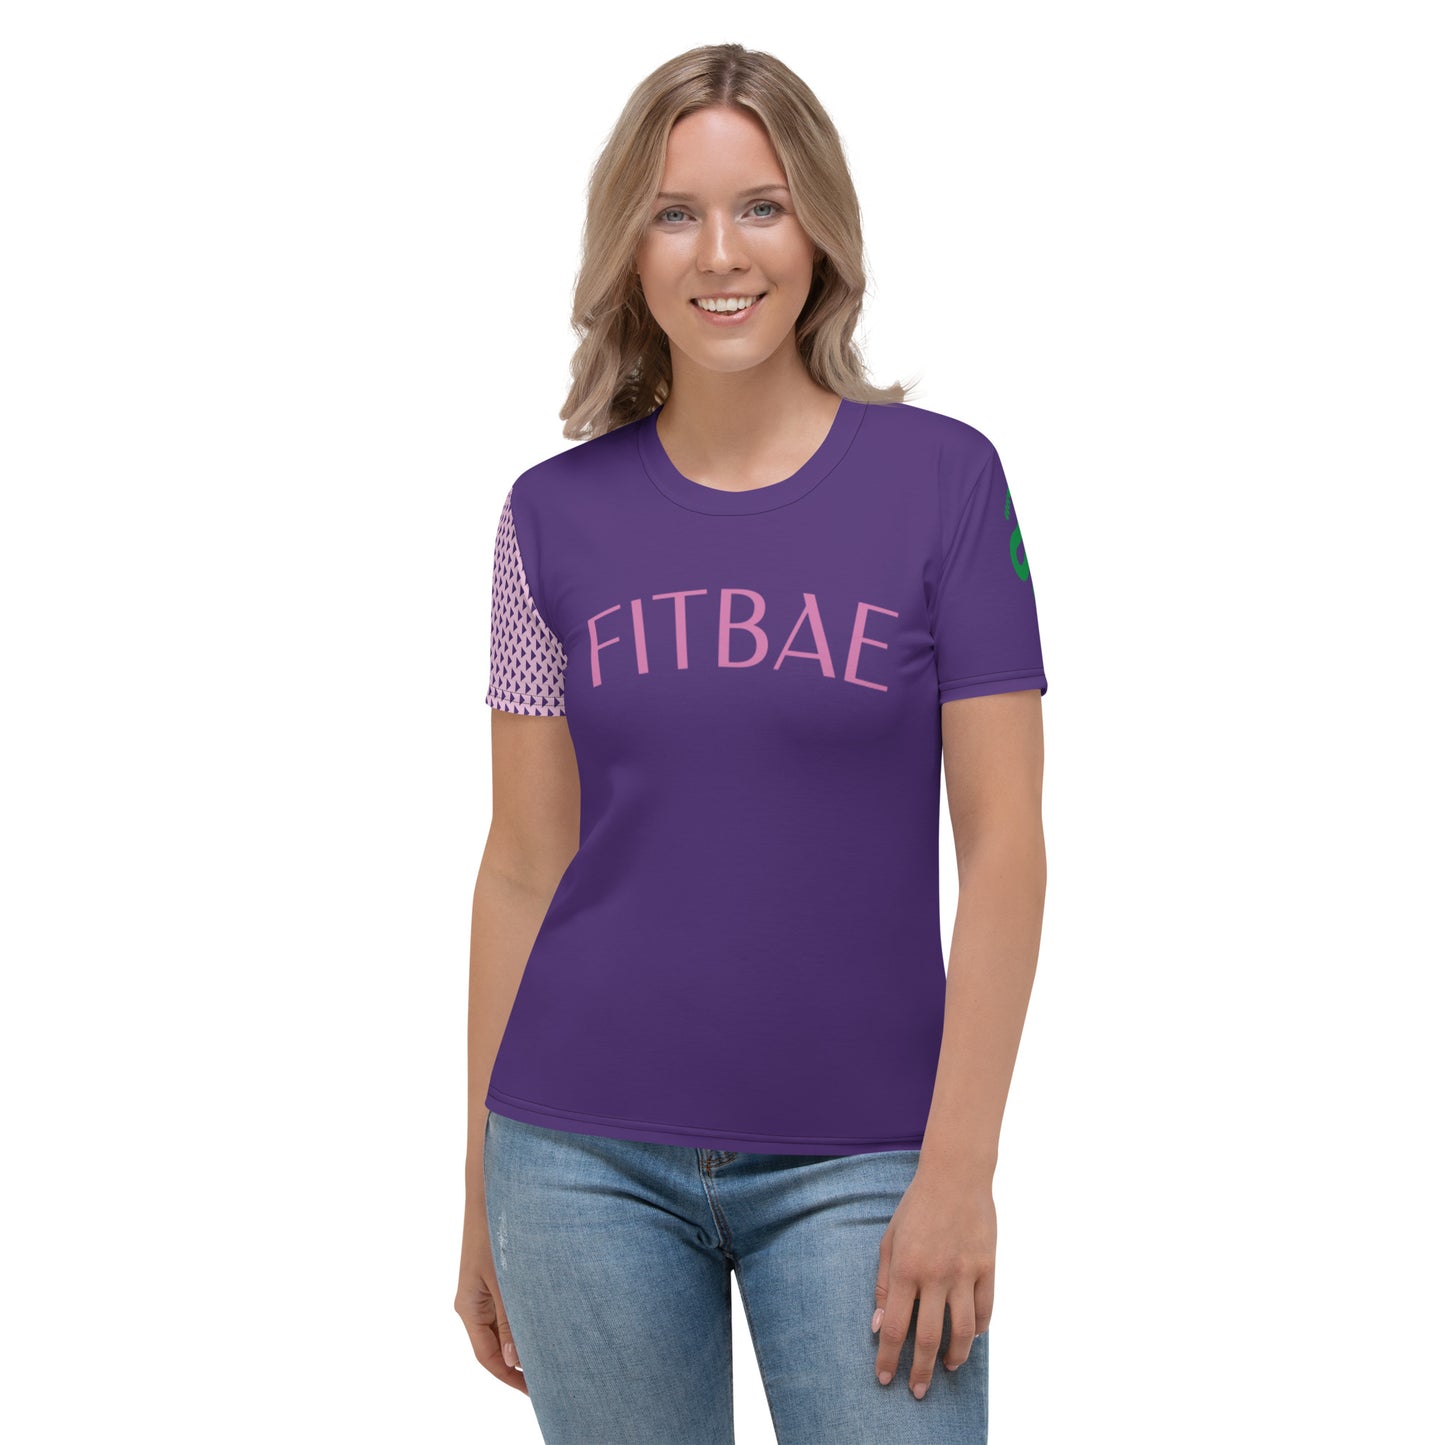 FITBAE Majestic Women's T-shirt